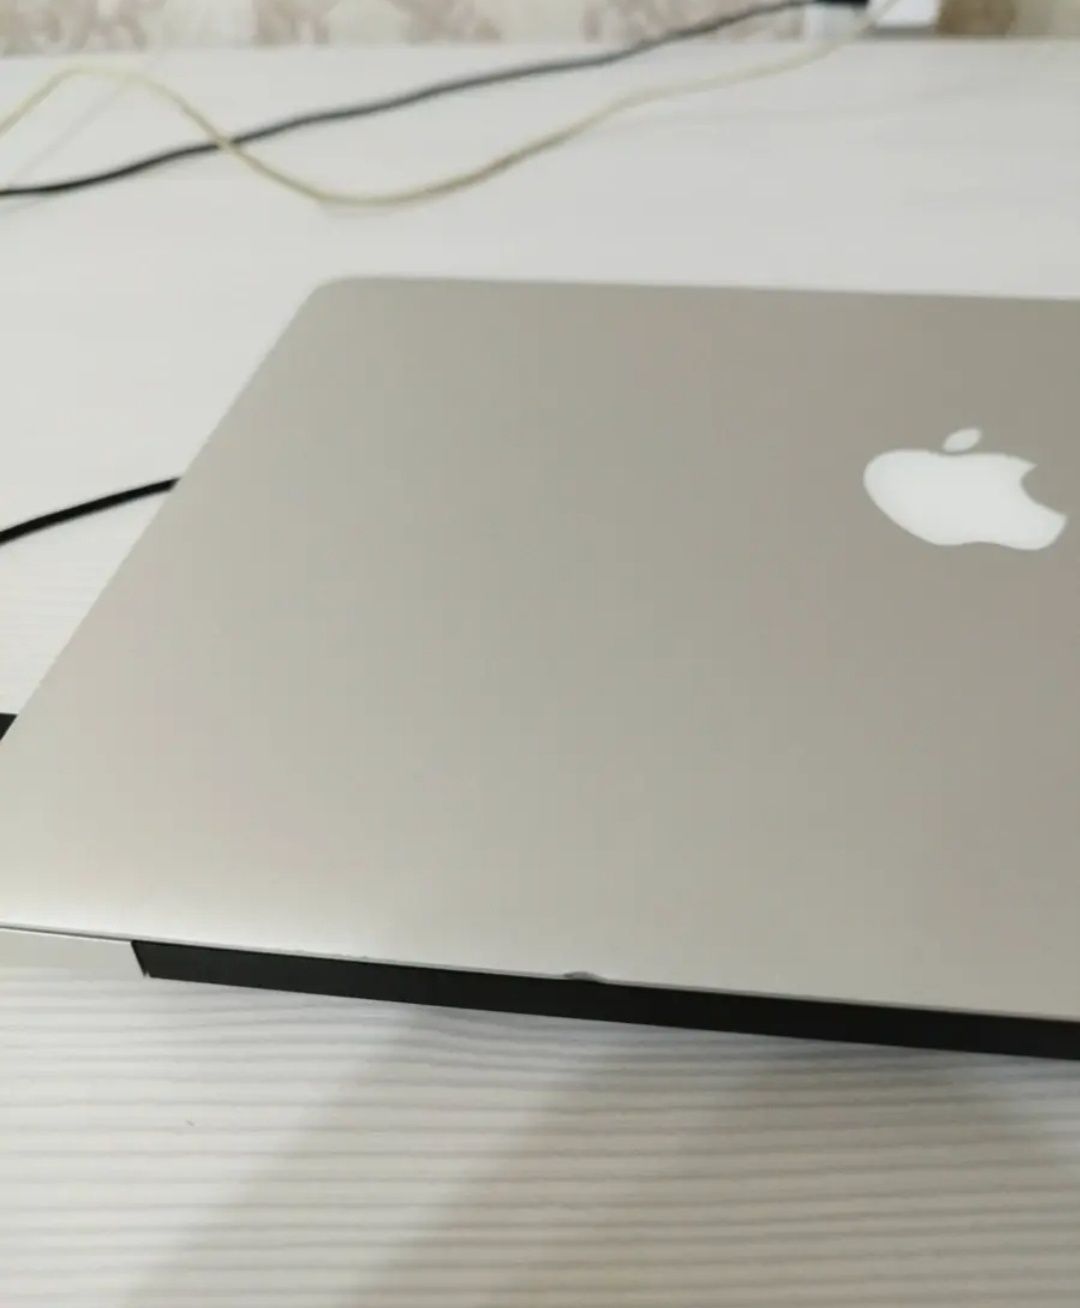 Apple Mac Air 2015 (куплен в 2016)